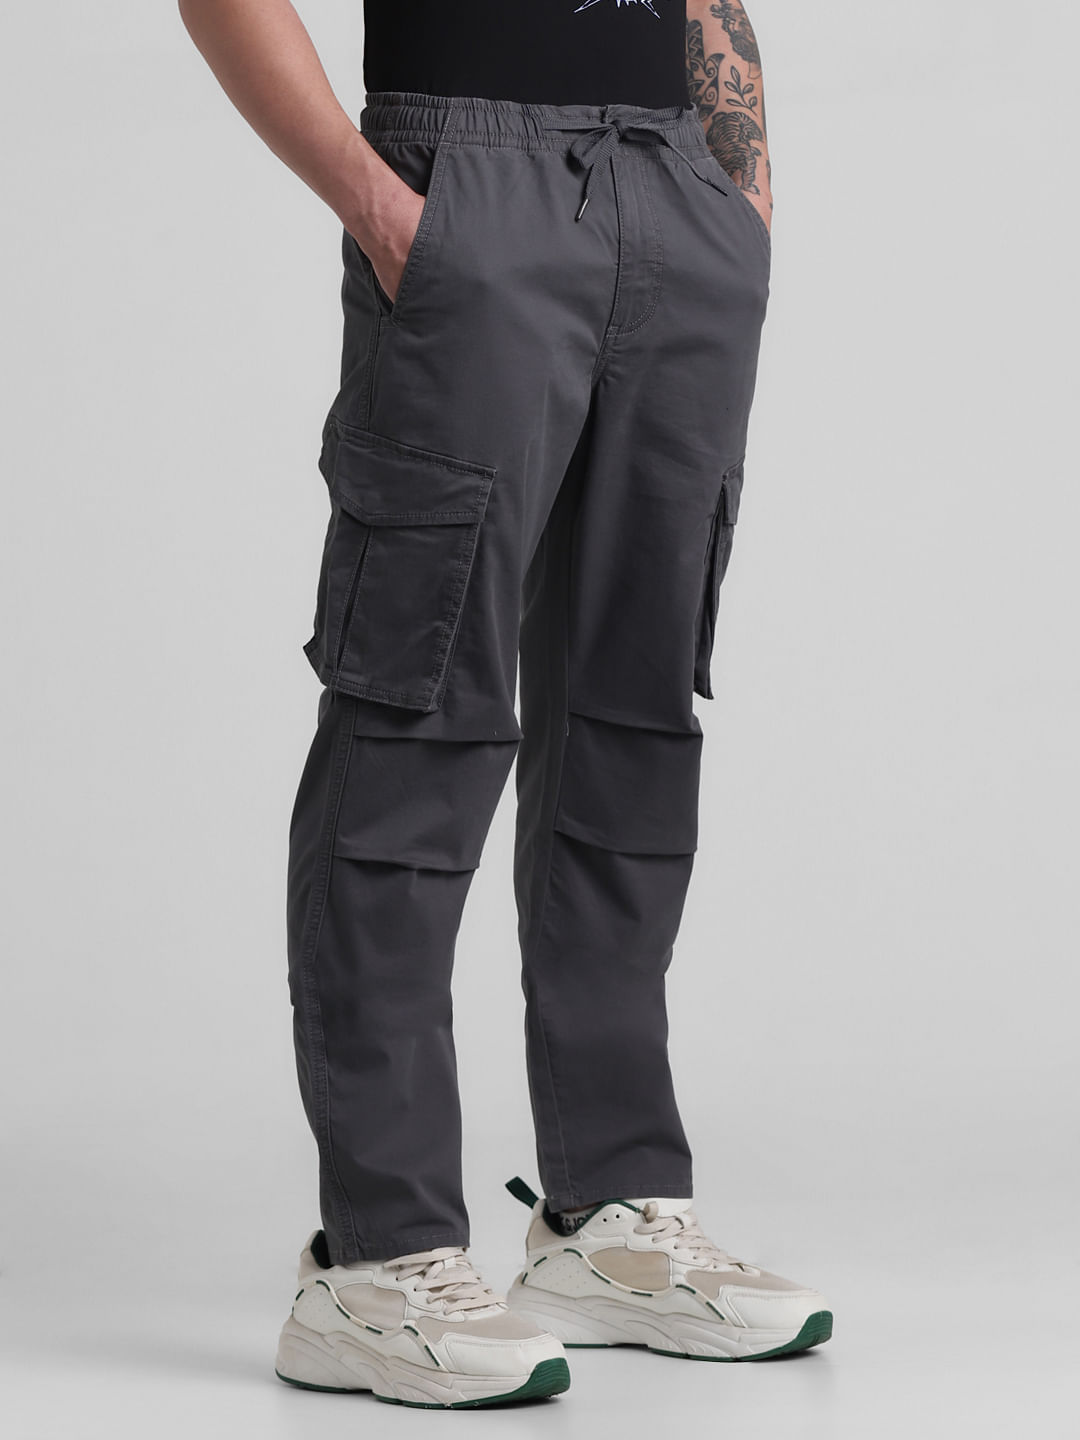 Pentagon BDU 2.0 Pants Tactical Mens Urban Army Combat Cargo Trousers Wolf  Grey | eBay